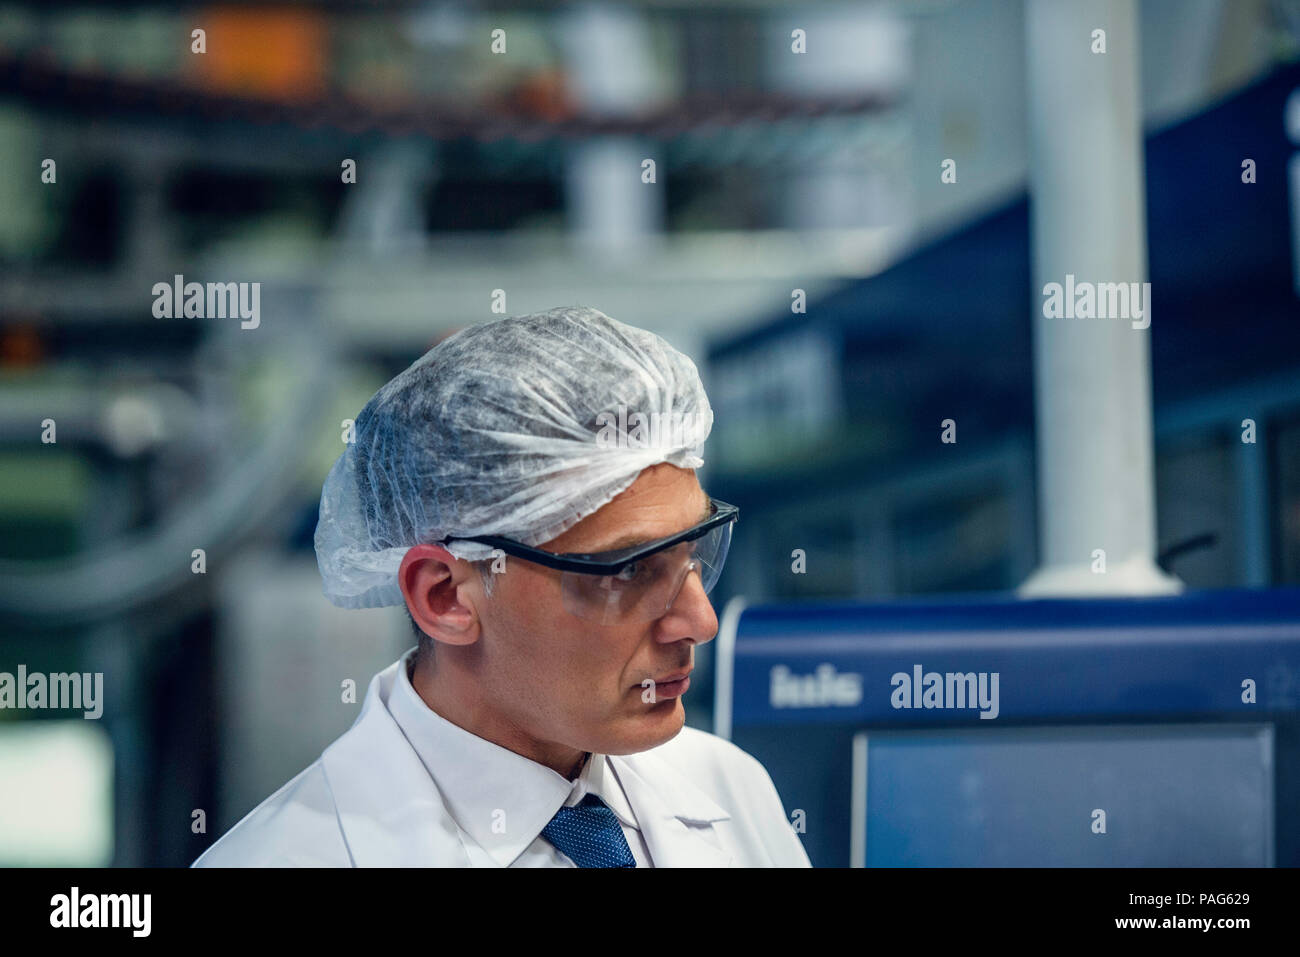 Scientist working in laboratory Stock Photo